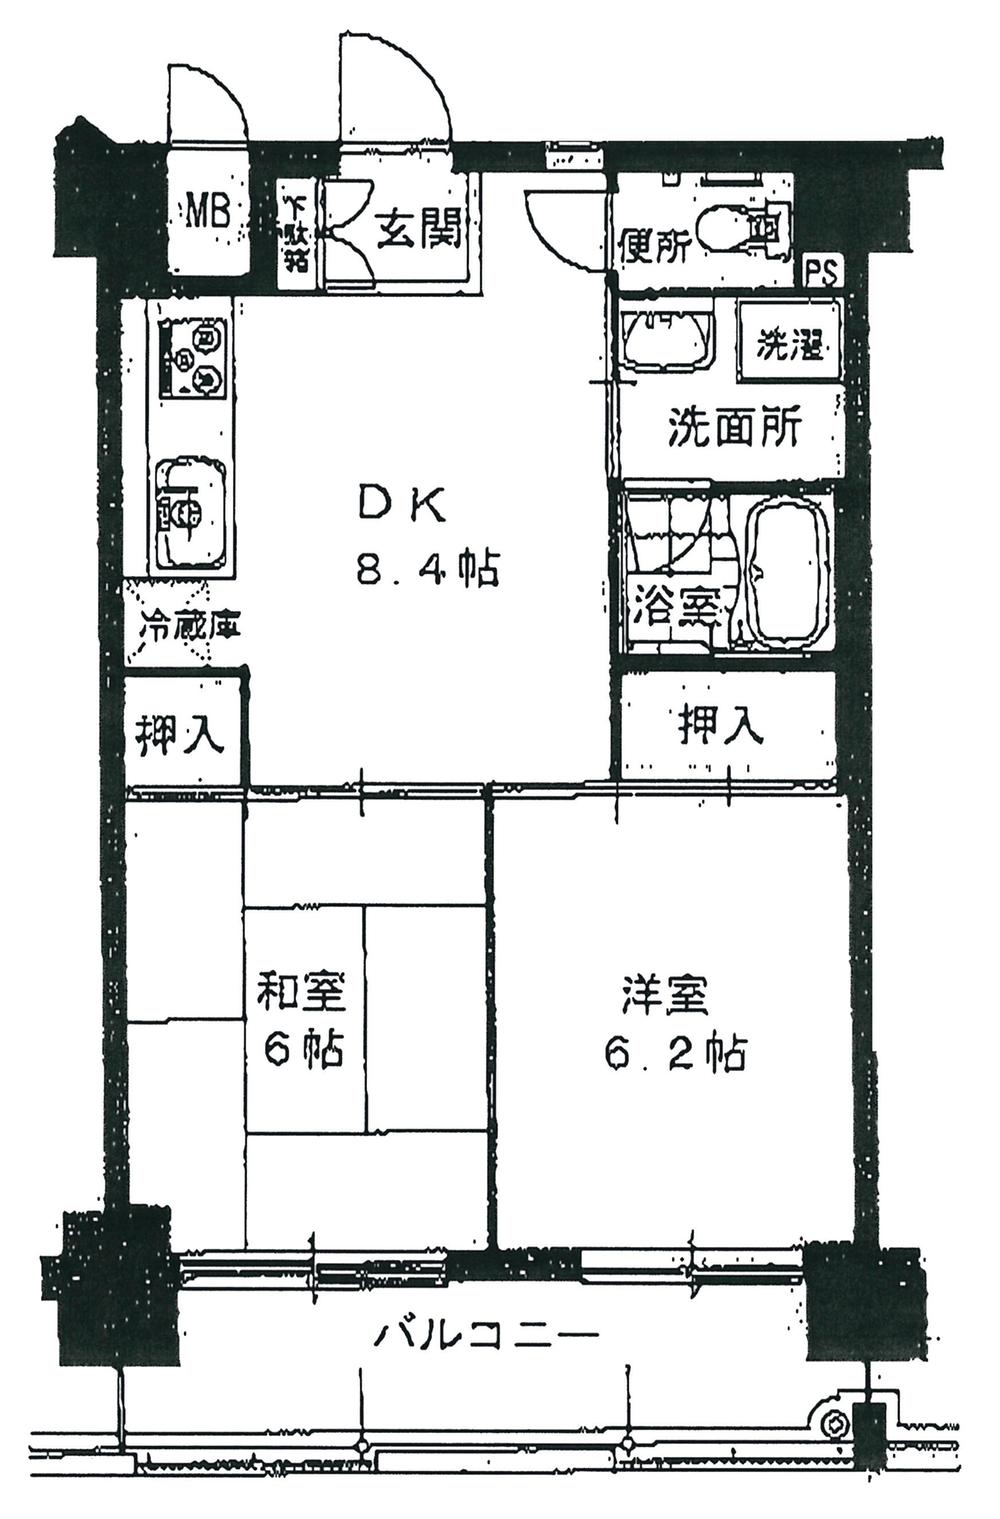 Floor plan. 2DK, Price 14.8 million yen, Occupied area 46.48 sq m , Balcony area 8.4 sq m